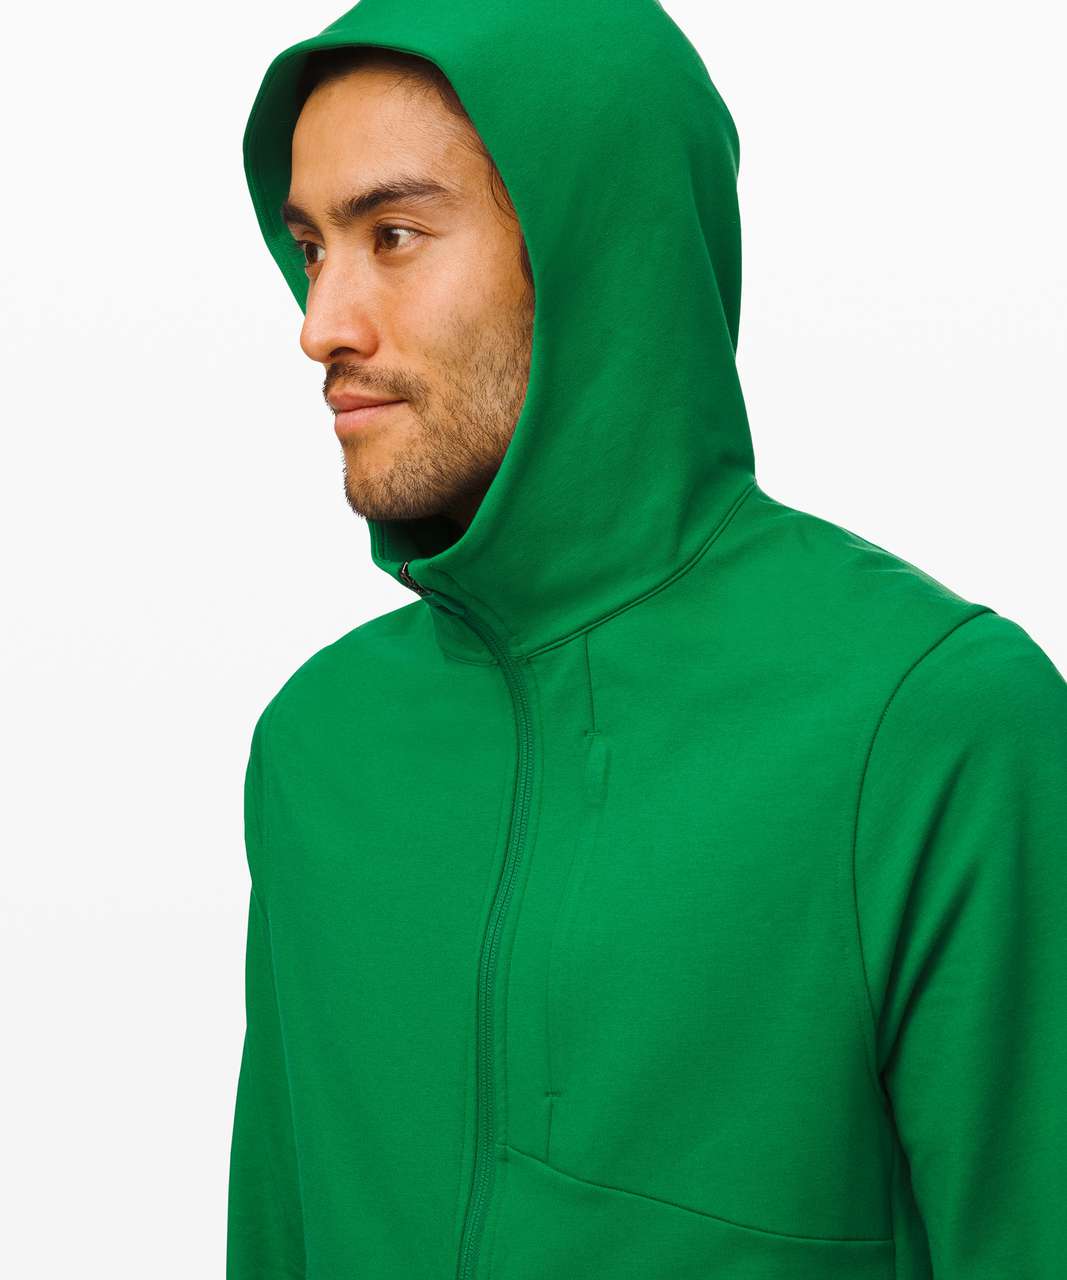 Lululemon City Sweat Green Hoodie Pullover Sweatshirt Space Dye Men's XL 